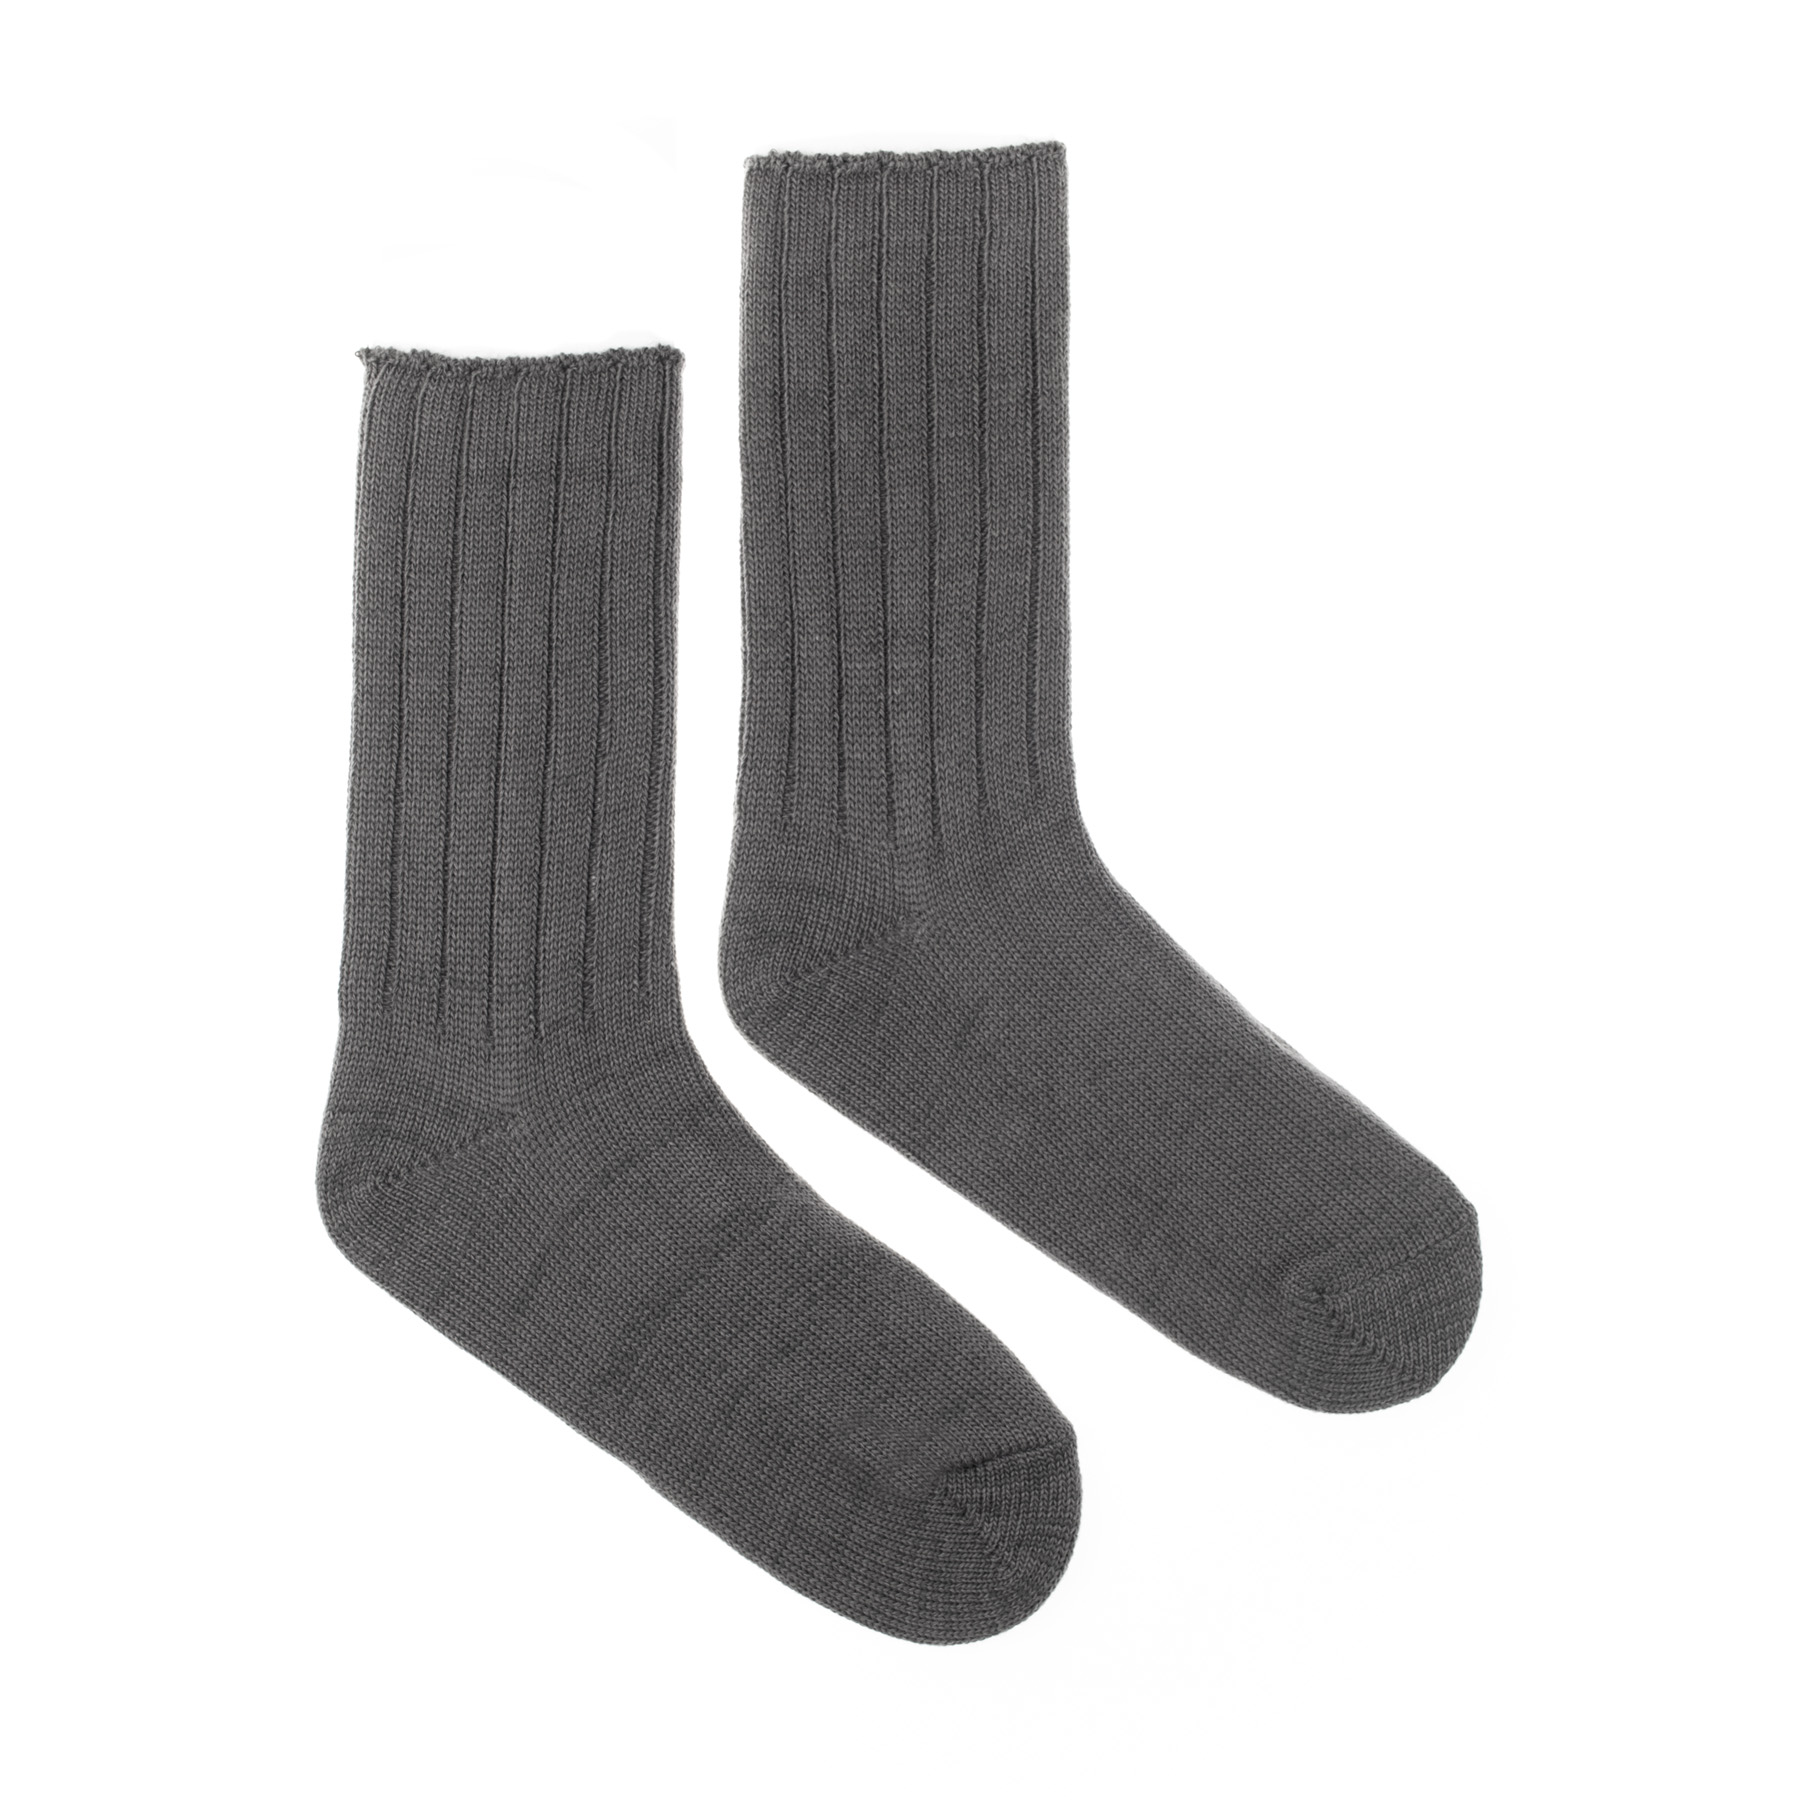 Ponožky Diabetické na křečové žíly šedé Fusakle